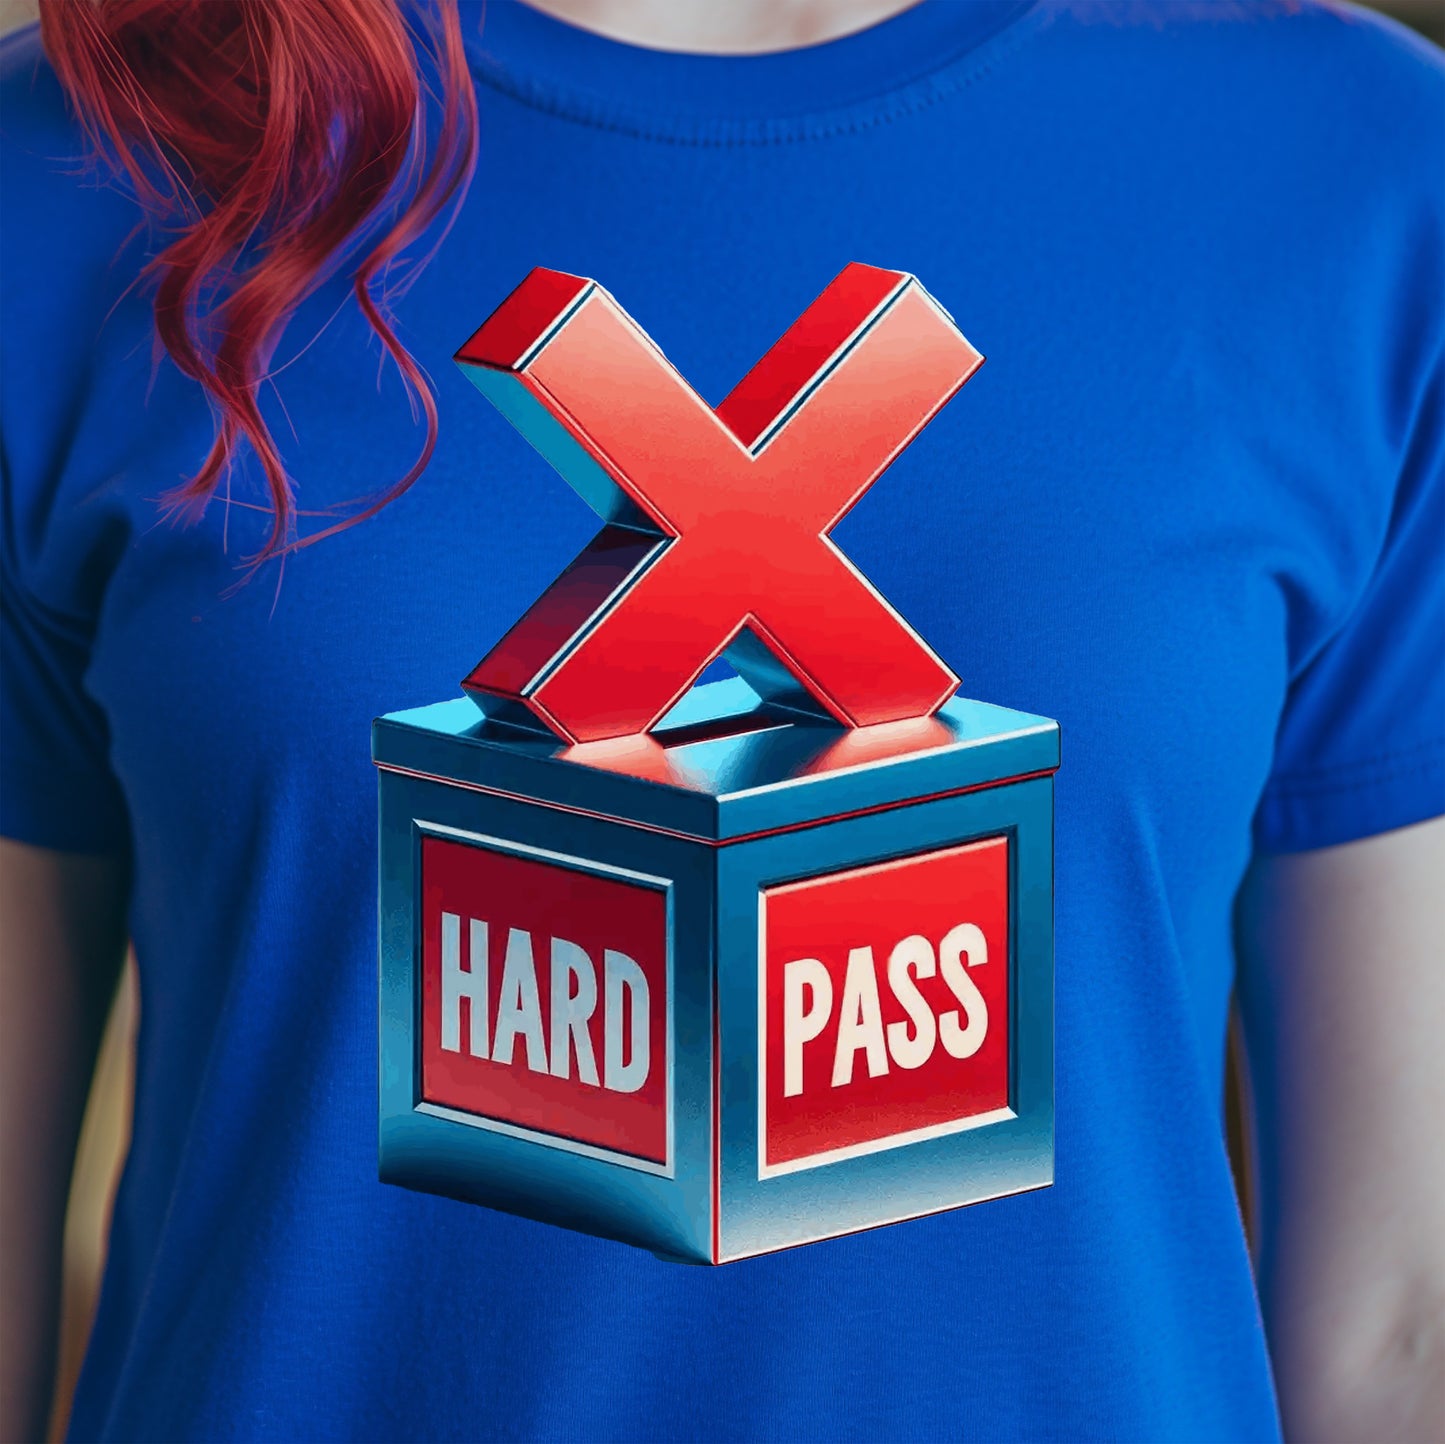 Hard Pass T-Shirt - Hard Pass T-Shirt Gift, Funny Hard Pass T-Shirt, Funny T-Shirt Gift, Hard Pass T-Shirt Gift, Sarcastic T-Shirt, Fun Tee